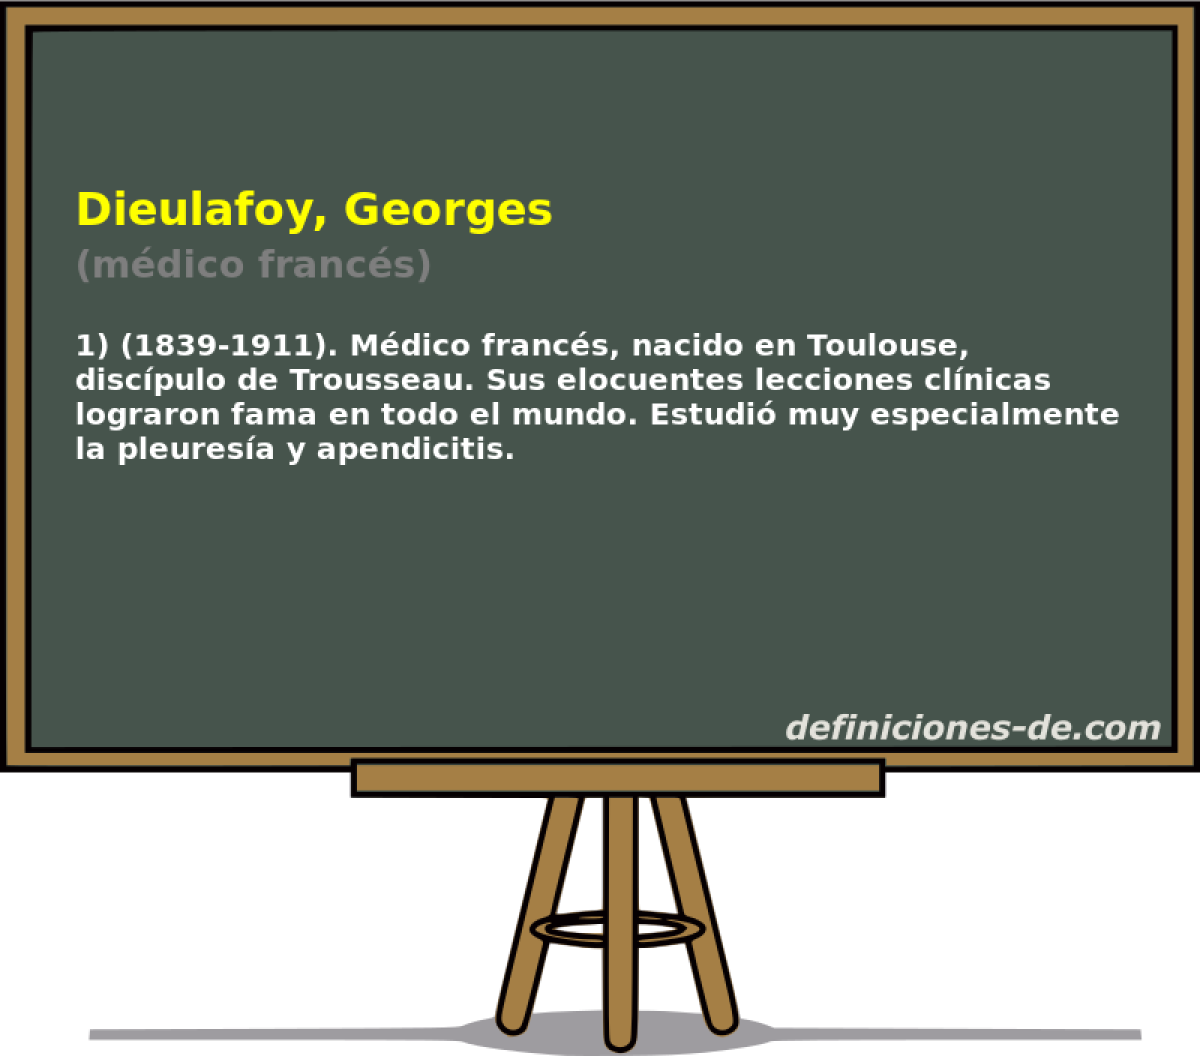 Dieulafoy, Georges (mdico francs)